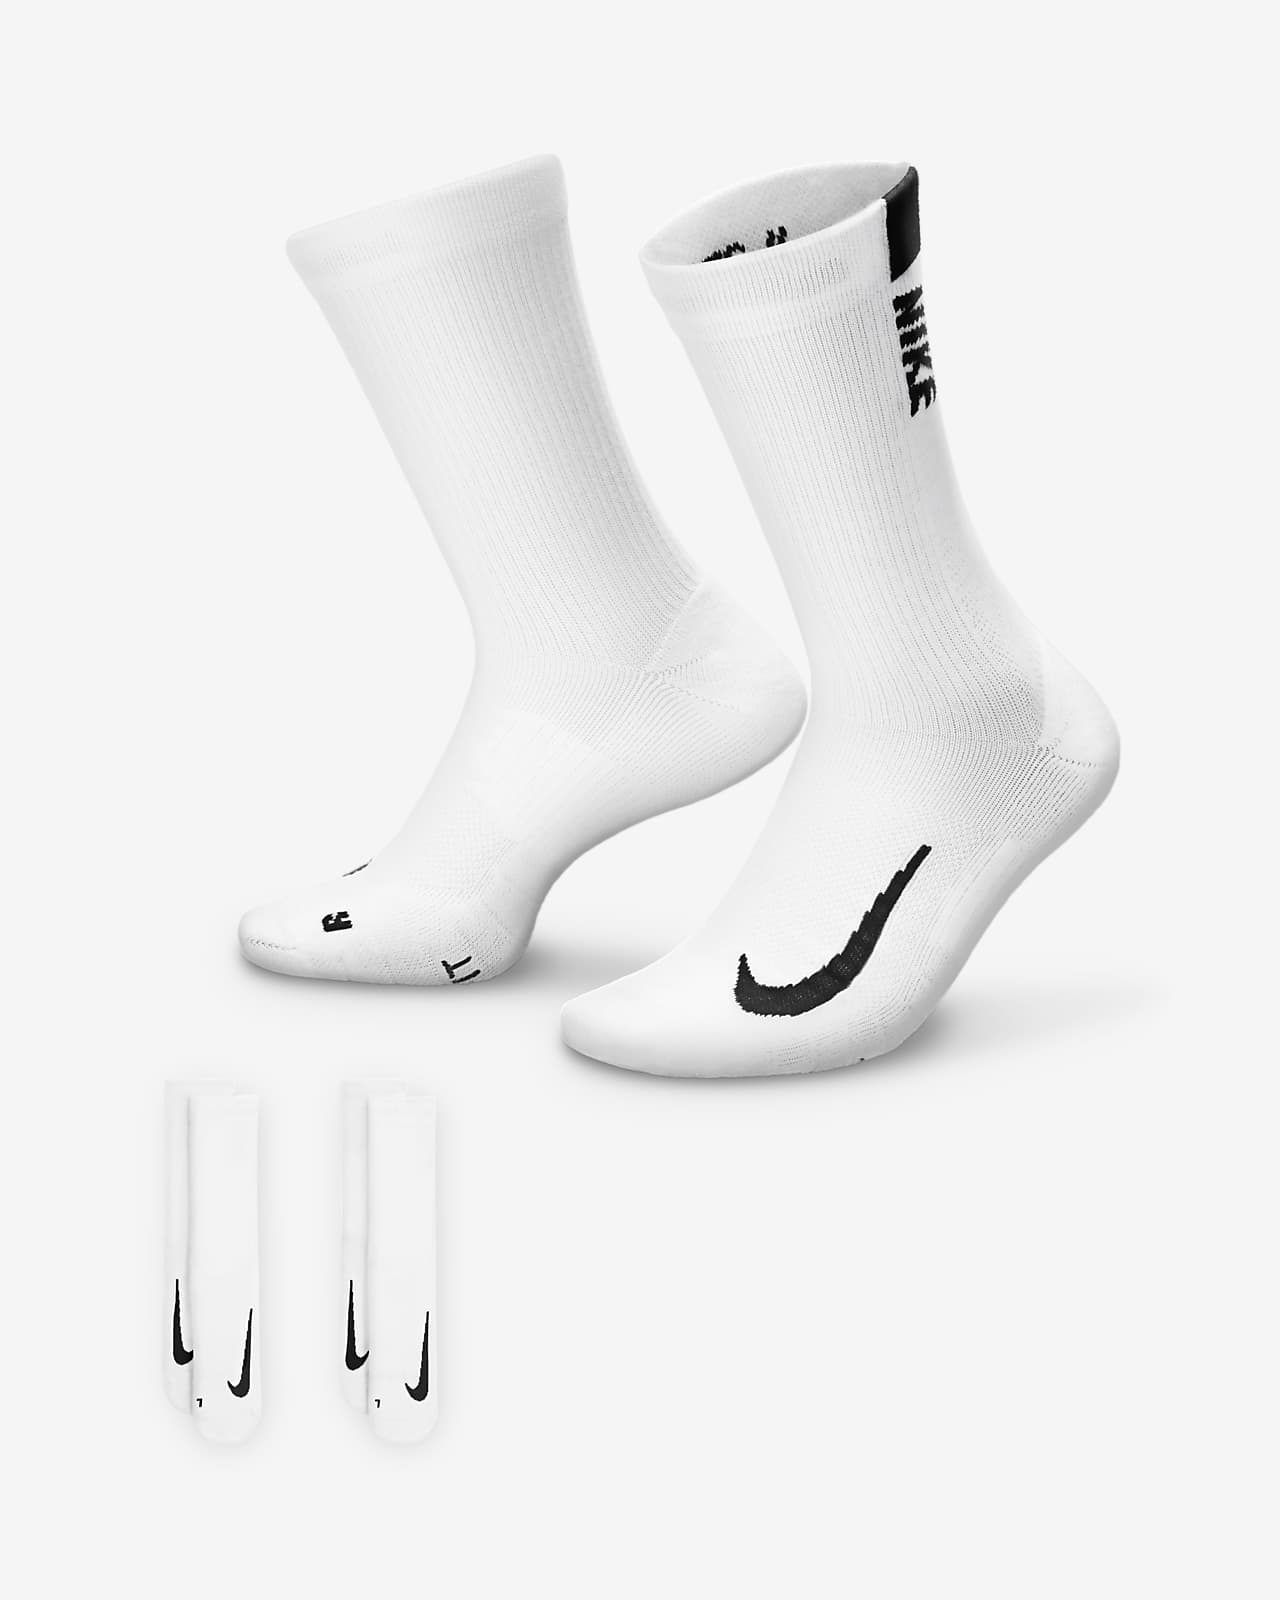 Calzettoni Nike Multiplier (2 paia)